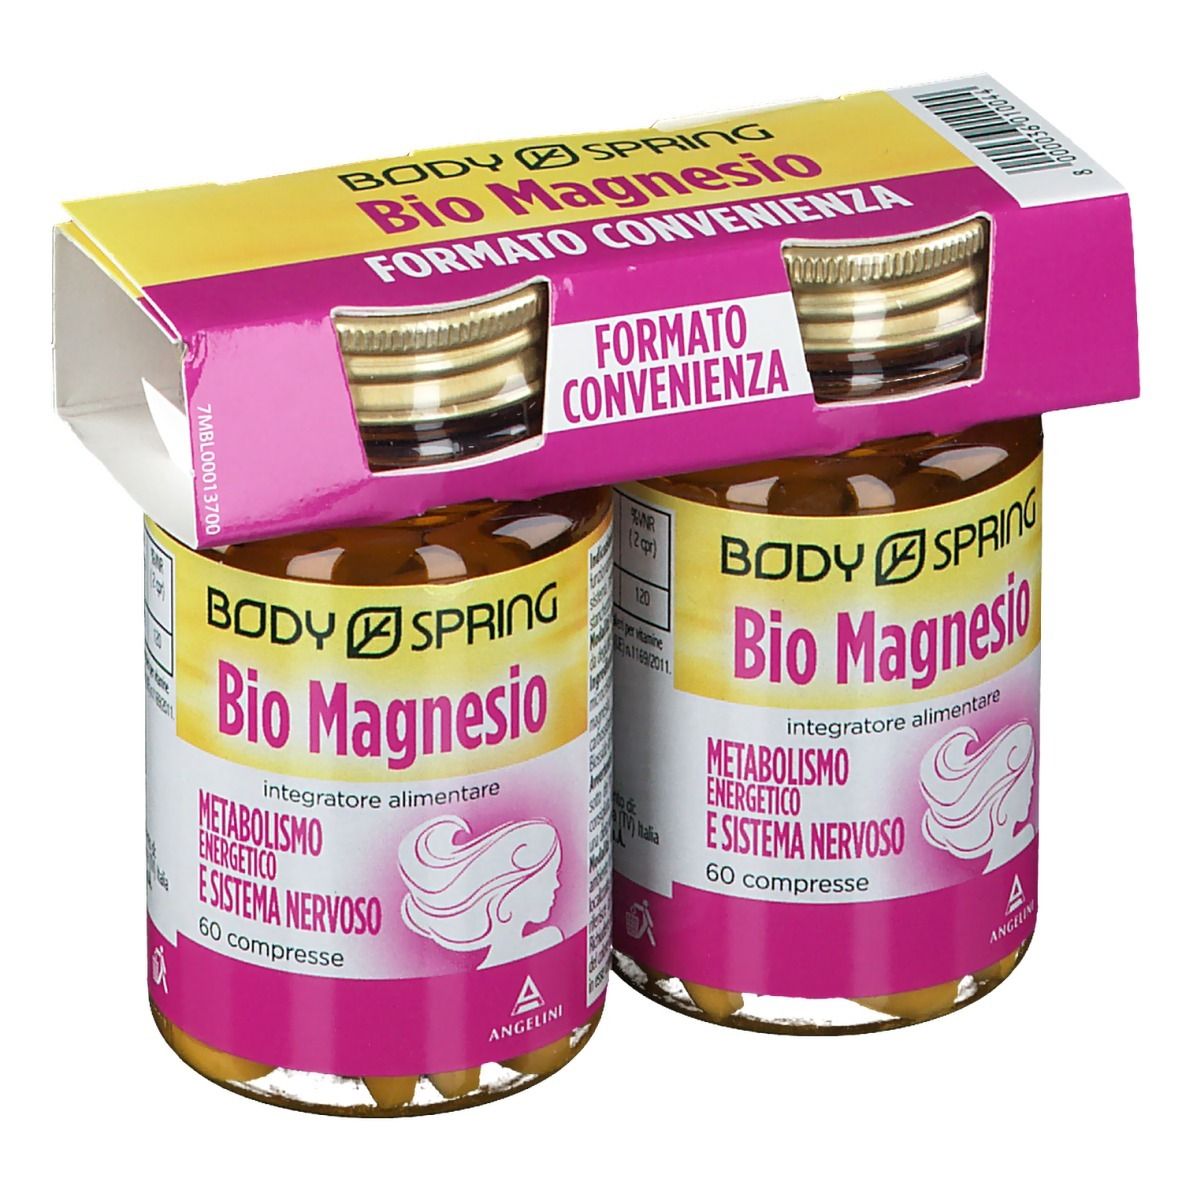 Body Spring Bio Magnesio Set